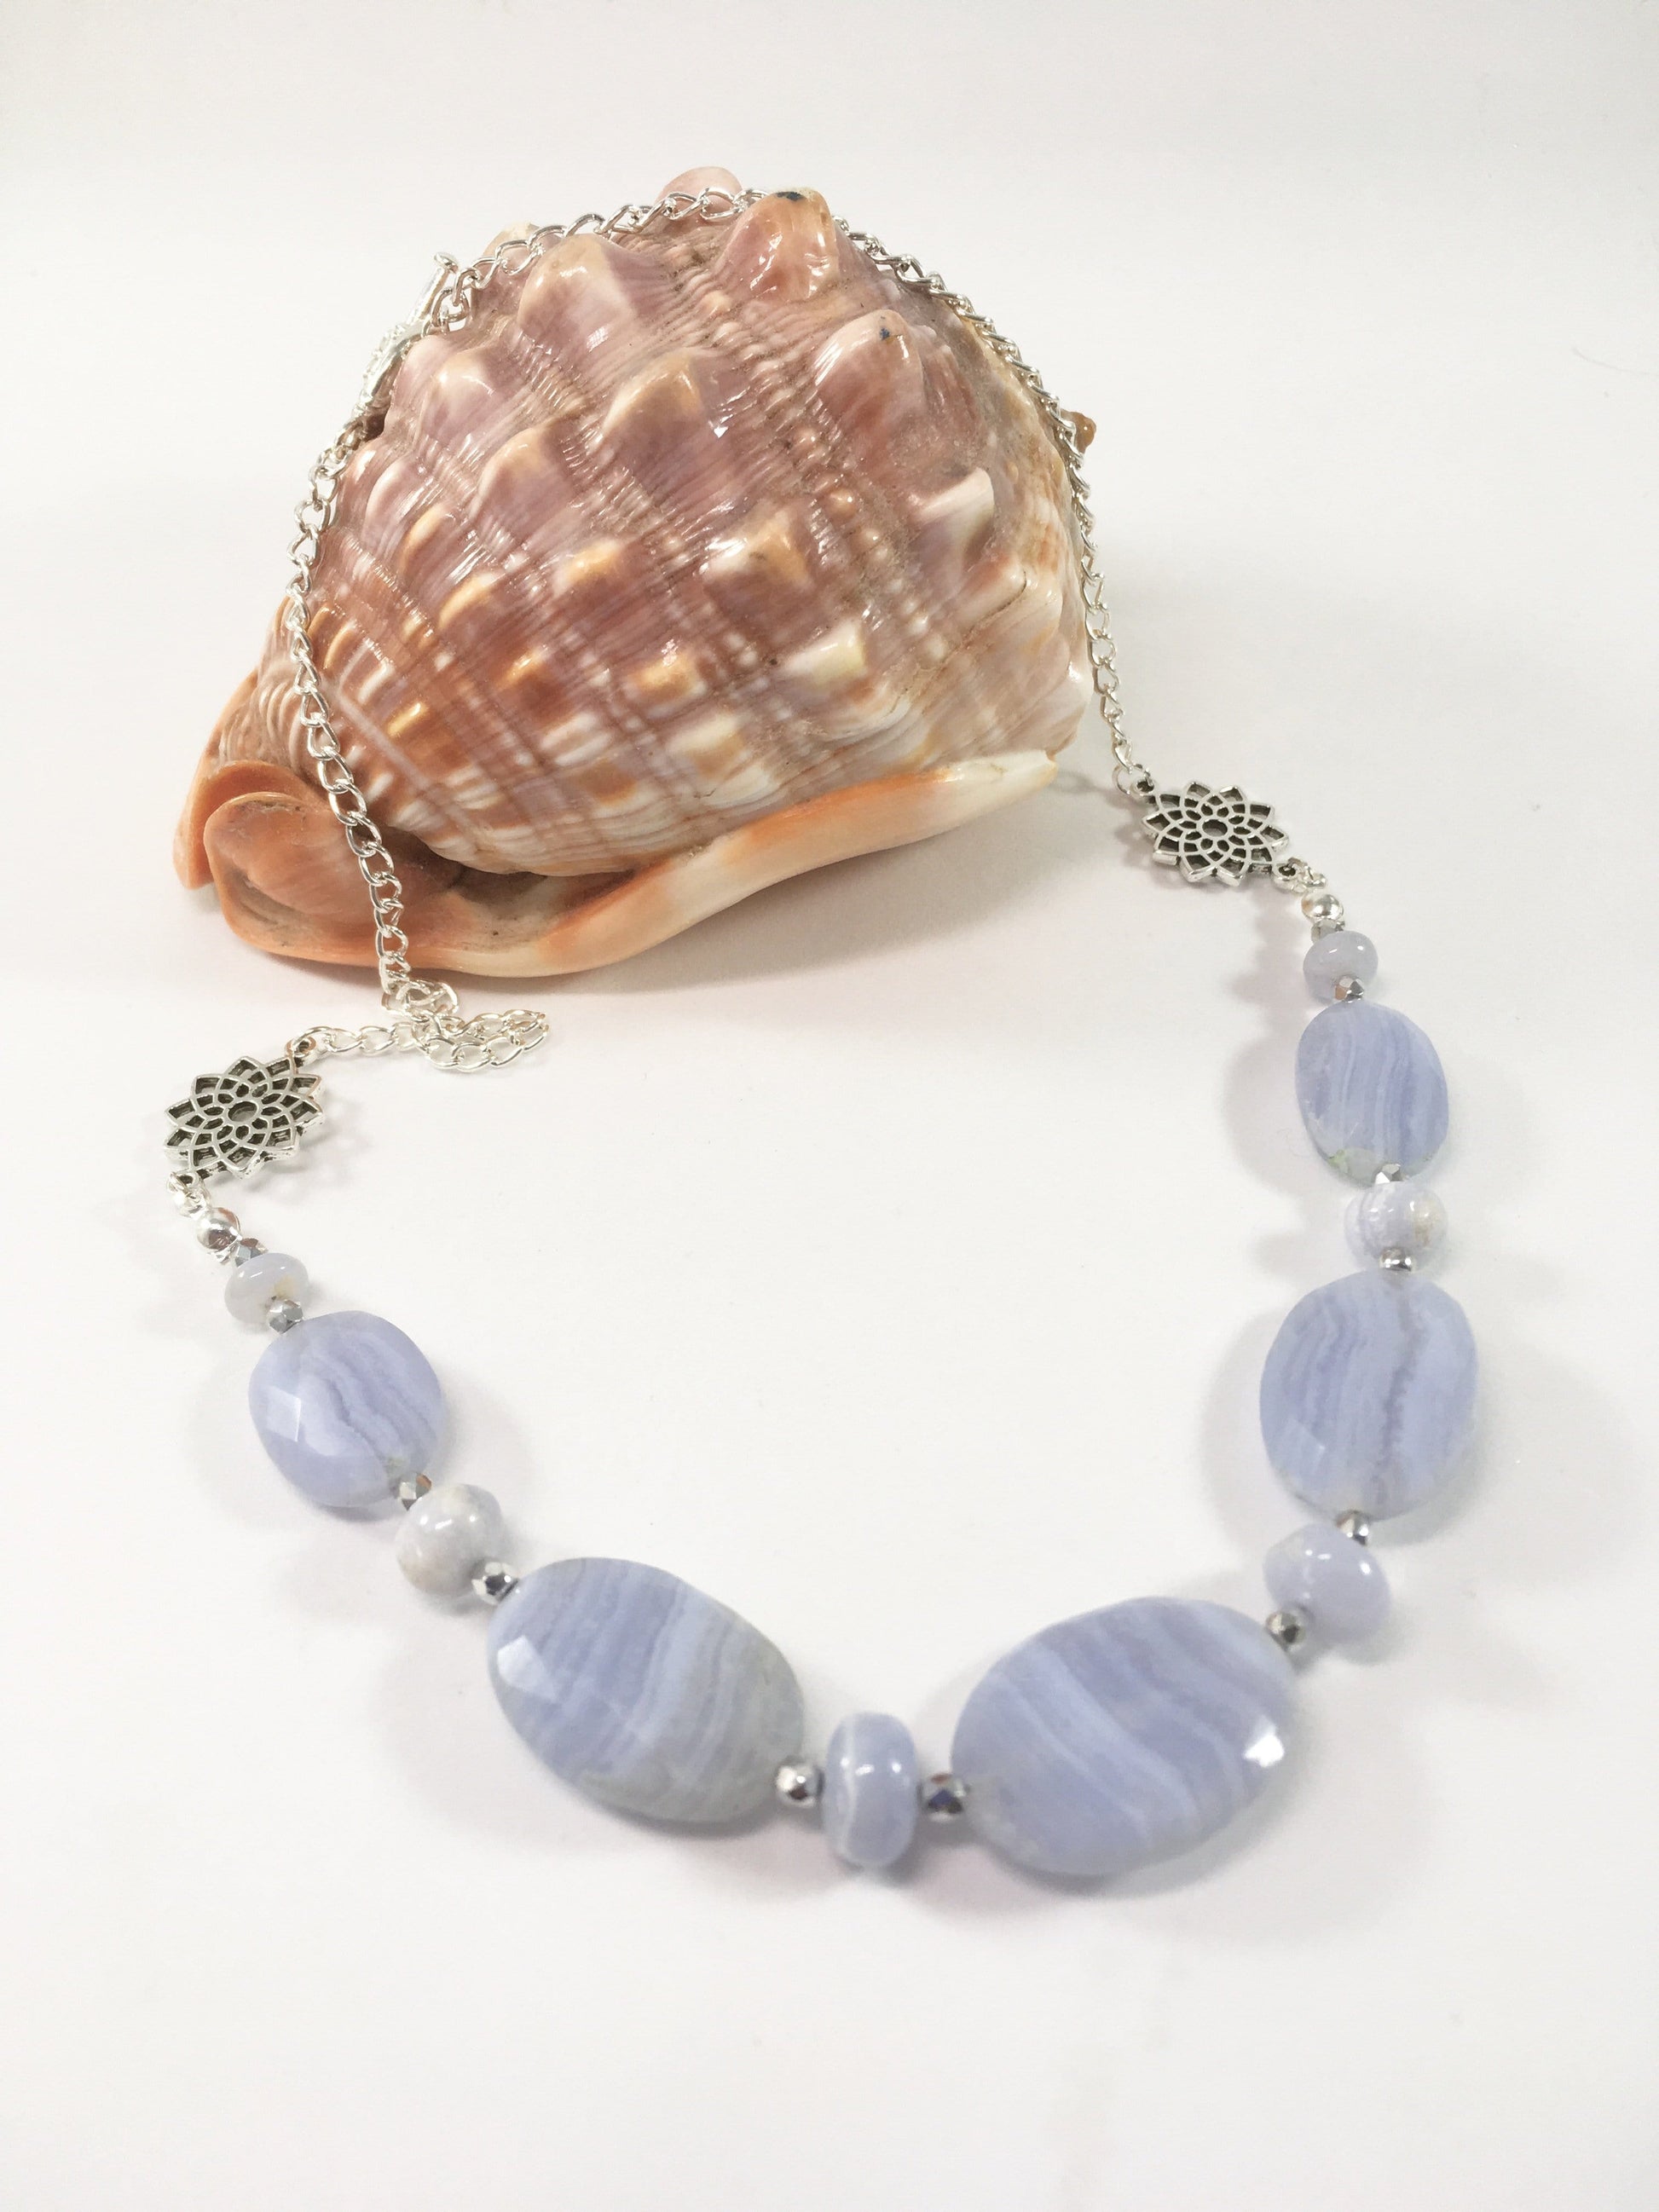 Necklace Blue Lace Agate Necklace Jewelz Galore Blue Lace Agate Gemstone Necklace | Jewelz Galore | Jewelery Online